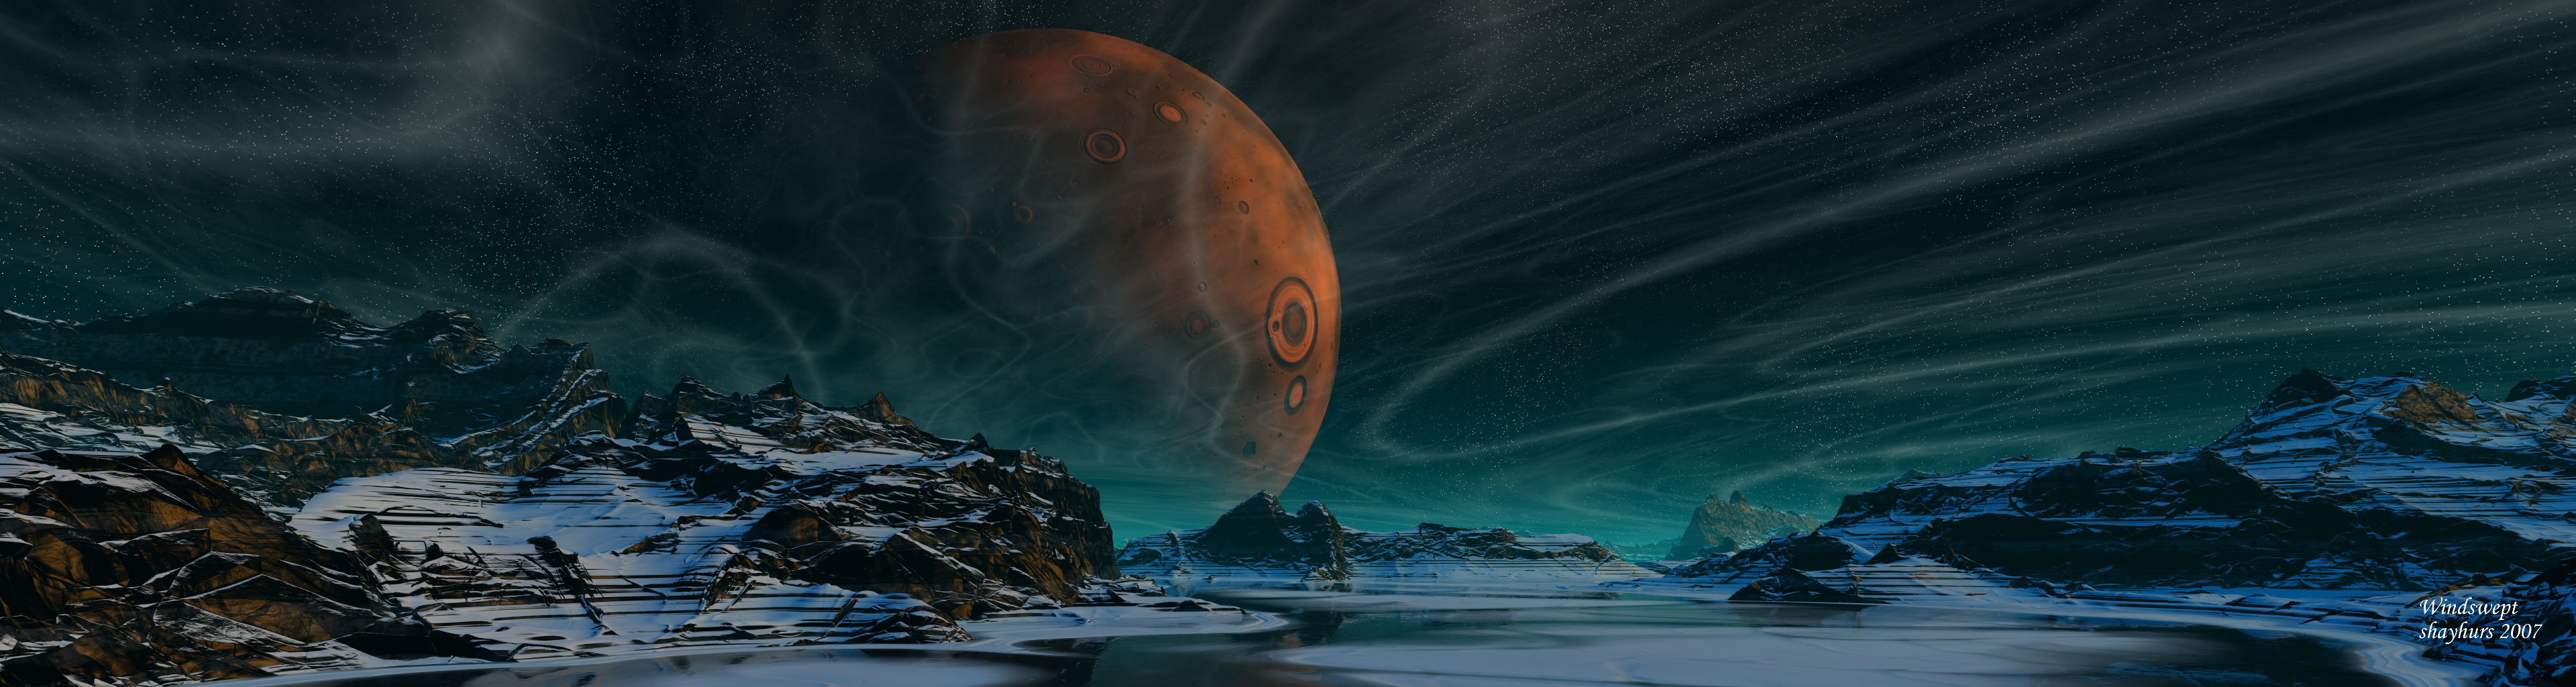 Windswept planet in winter: a stunning HD desktop wallpaper by Shayhurs.